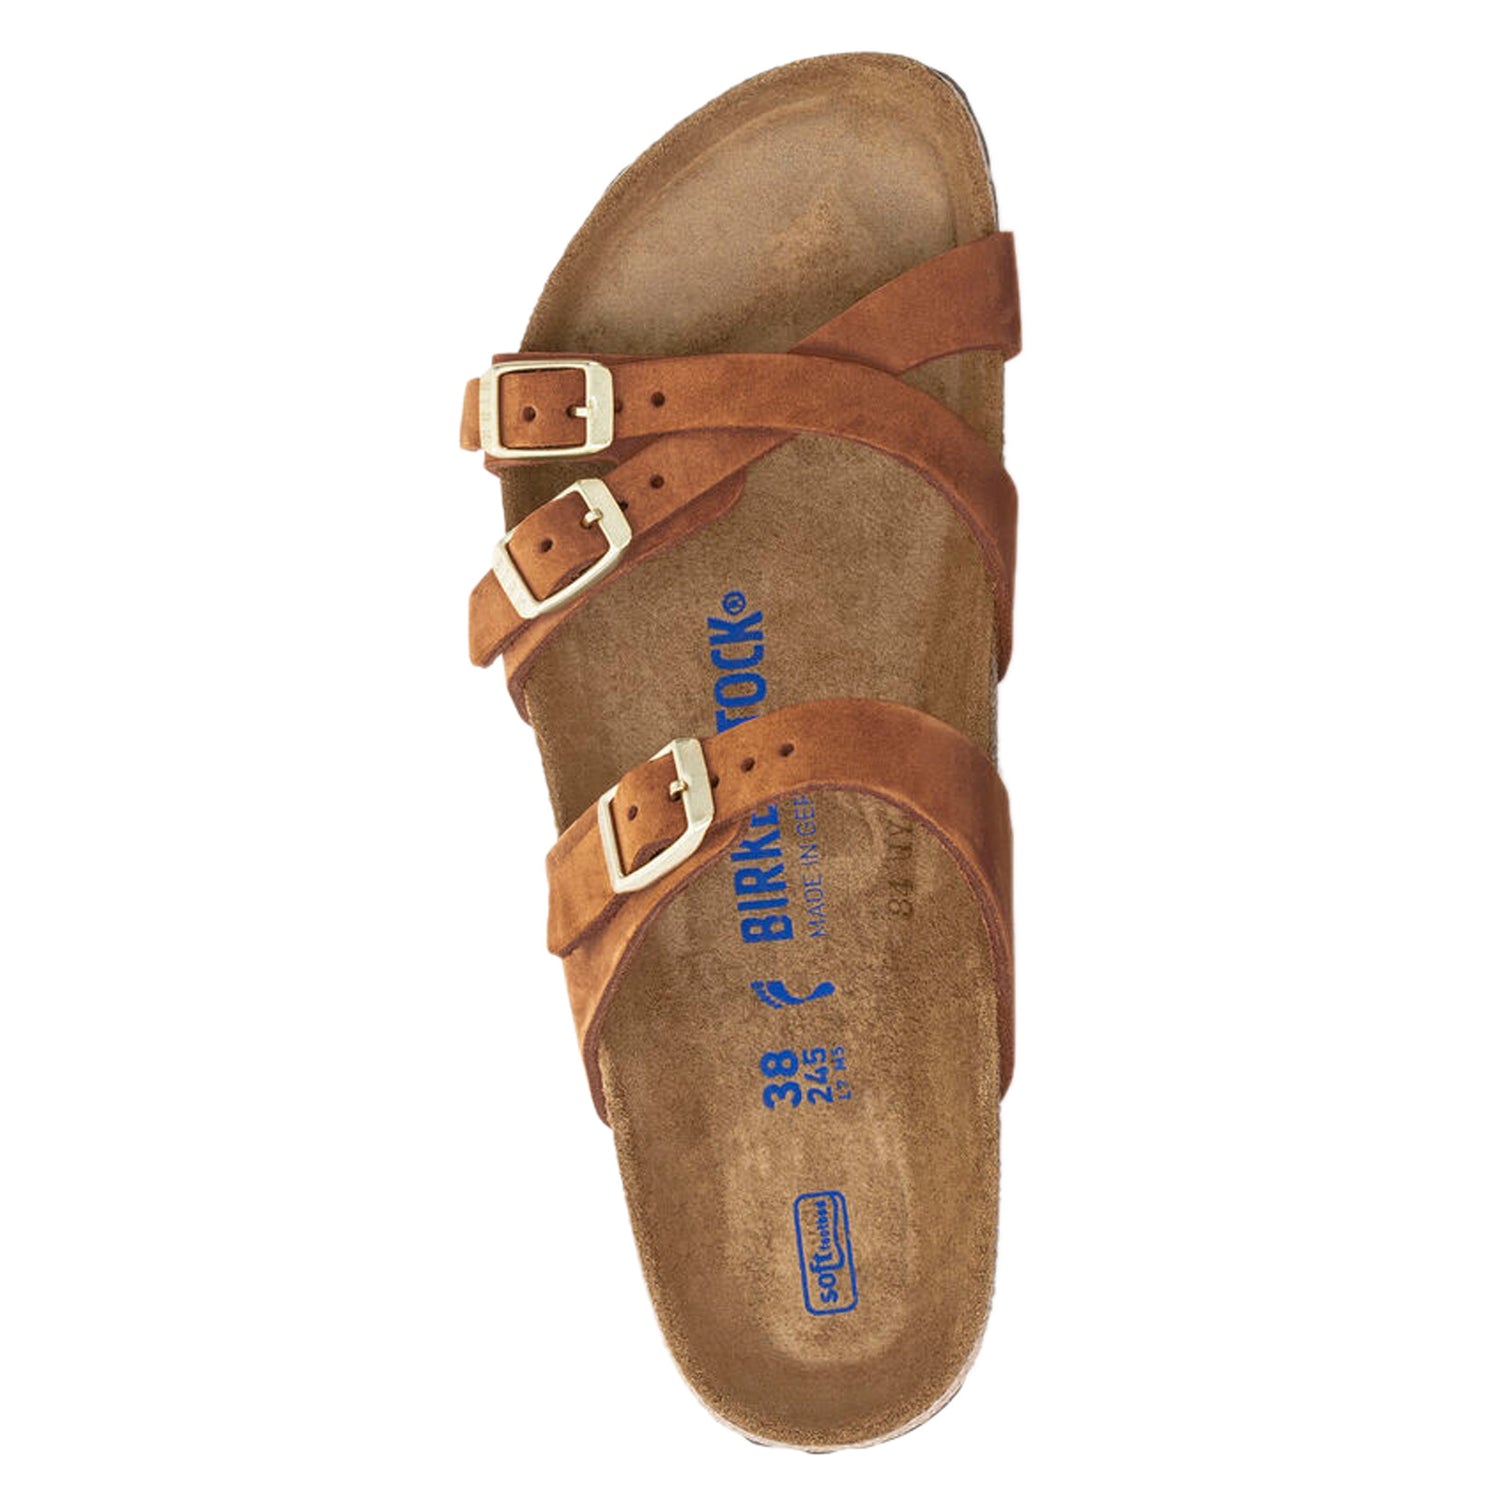 Peltz Shoes  Women's Birkenstock Franca Soft Footbed Sandal - Regular Width PECAN NUBUCK 1021 490 R